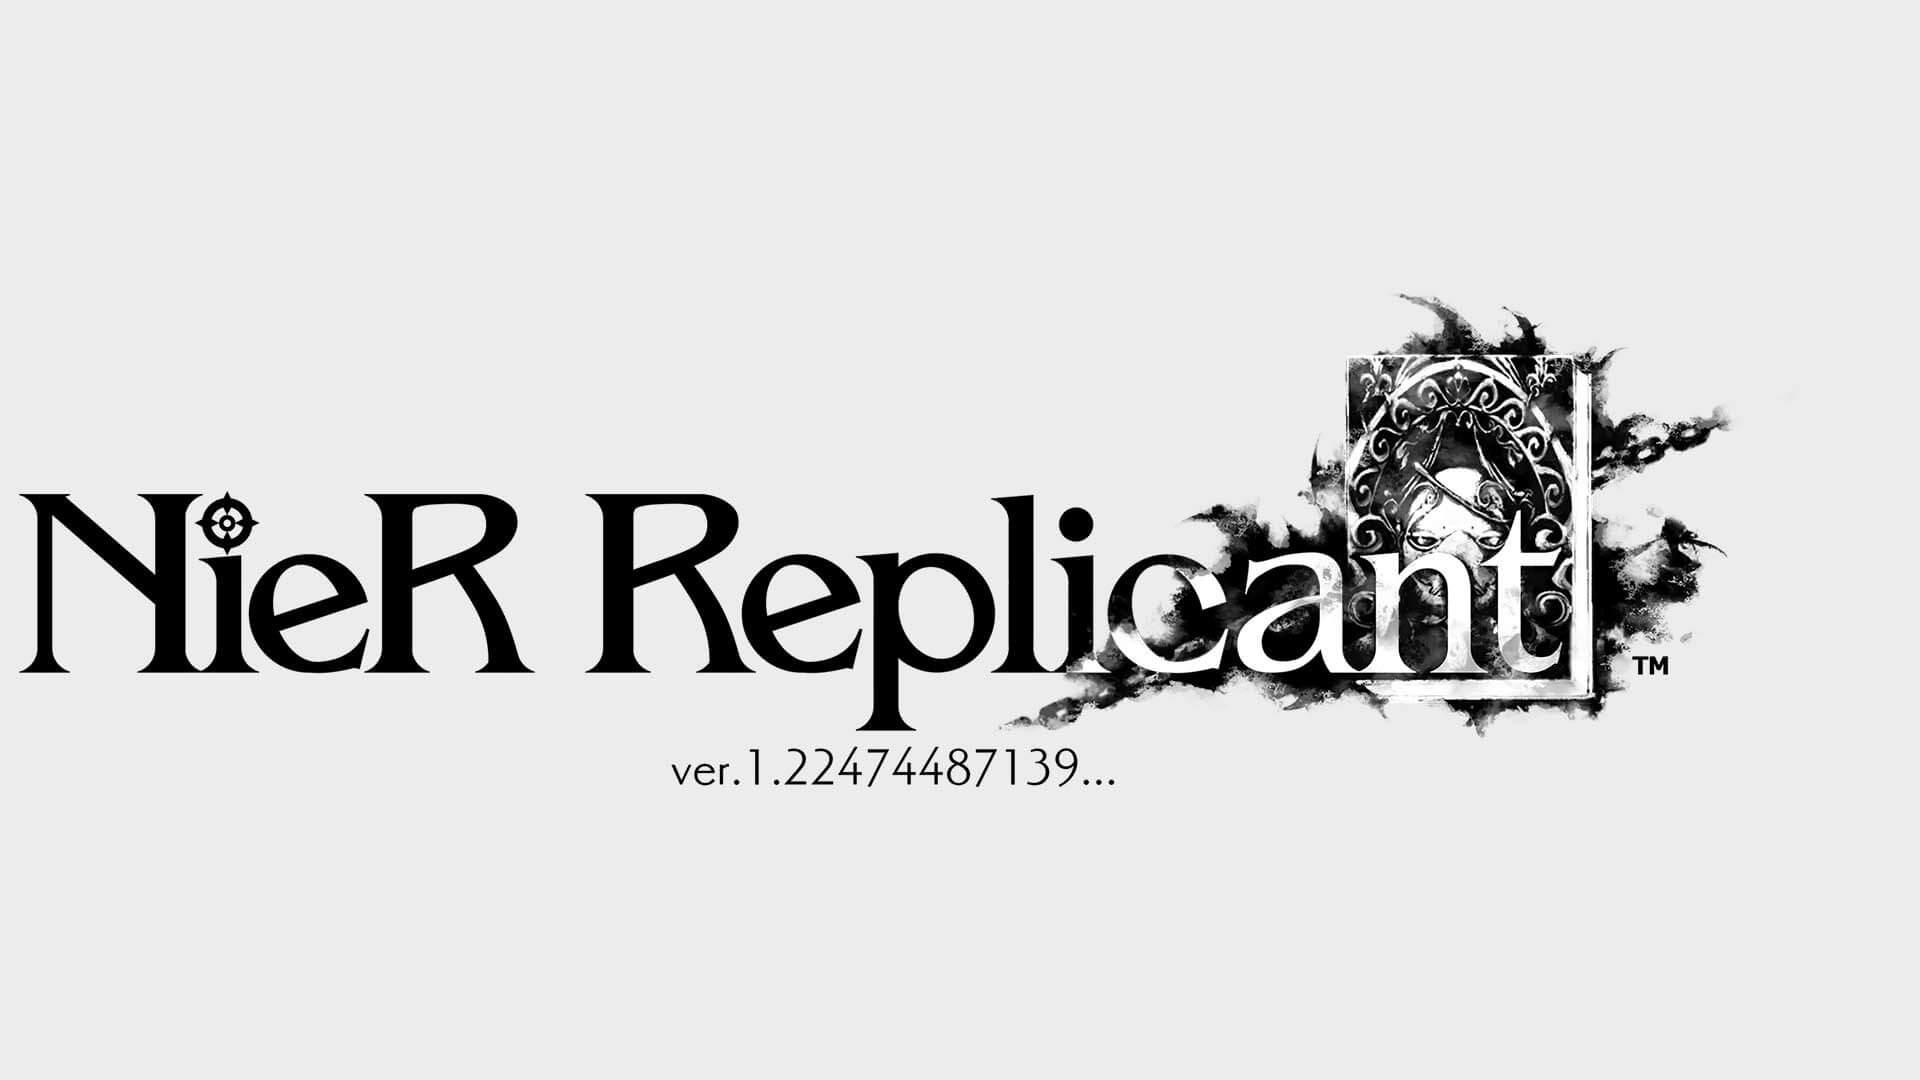 Nier Replicant Ver.1.22474487139 Logo Black